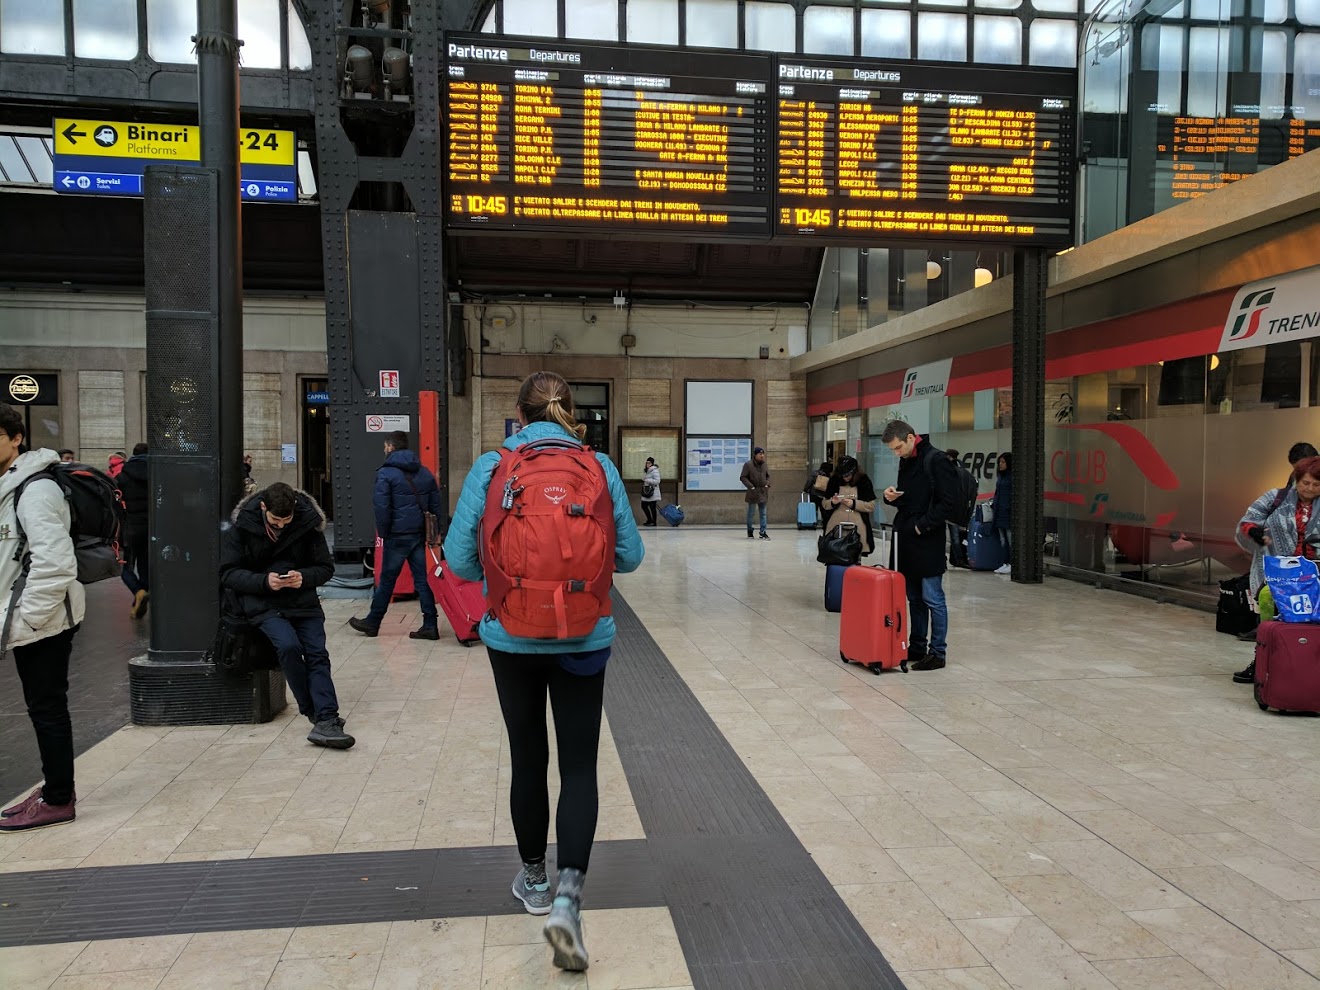 train station departures board